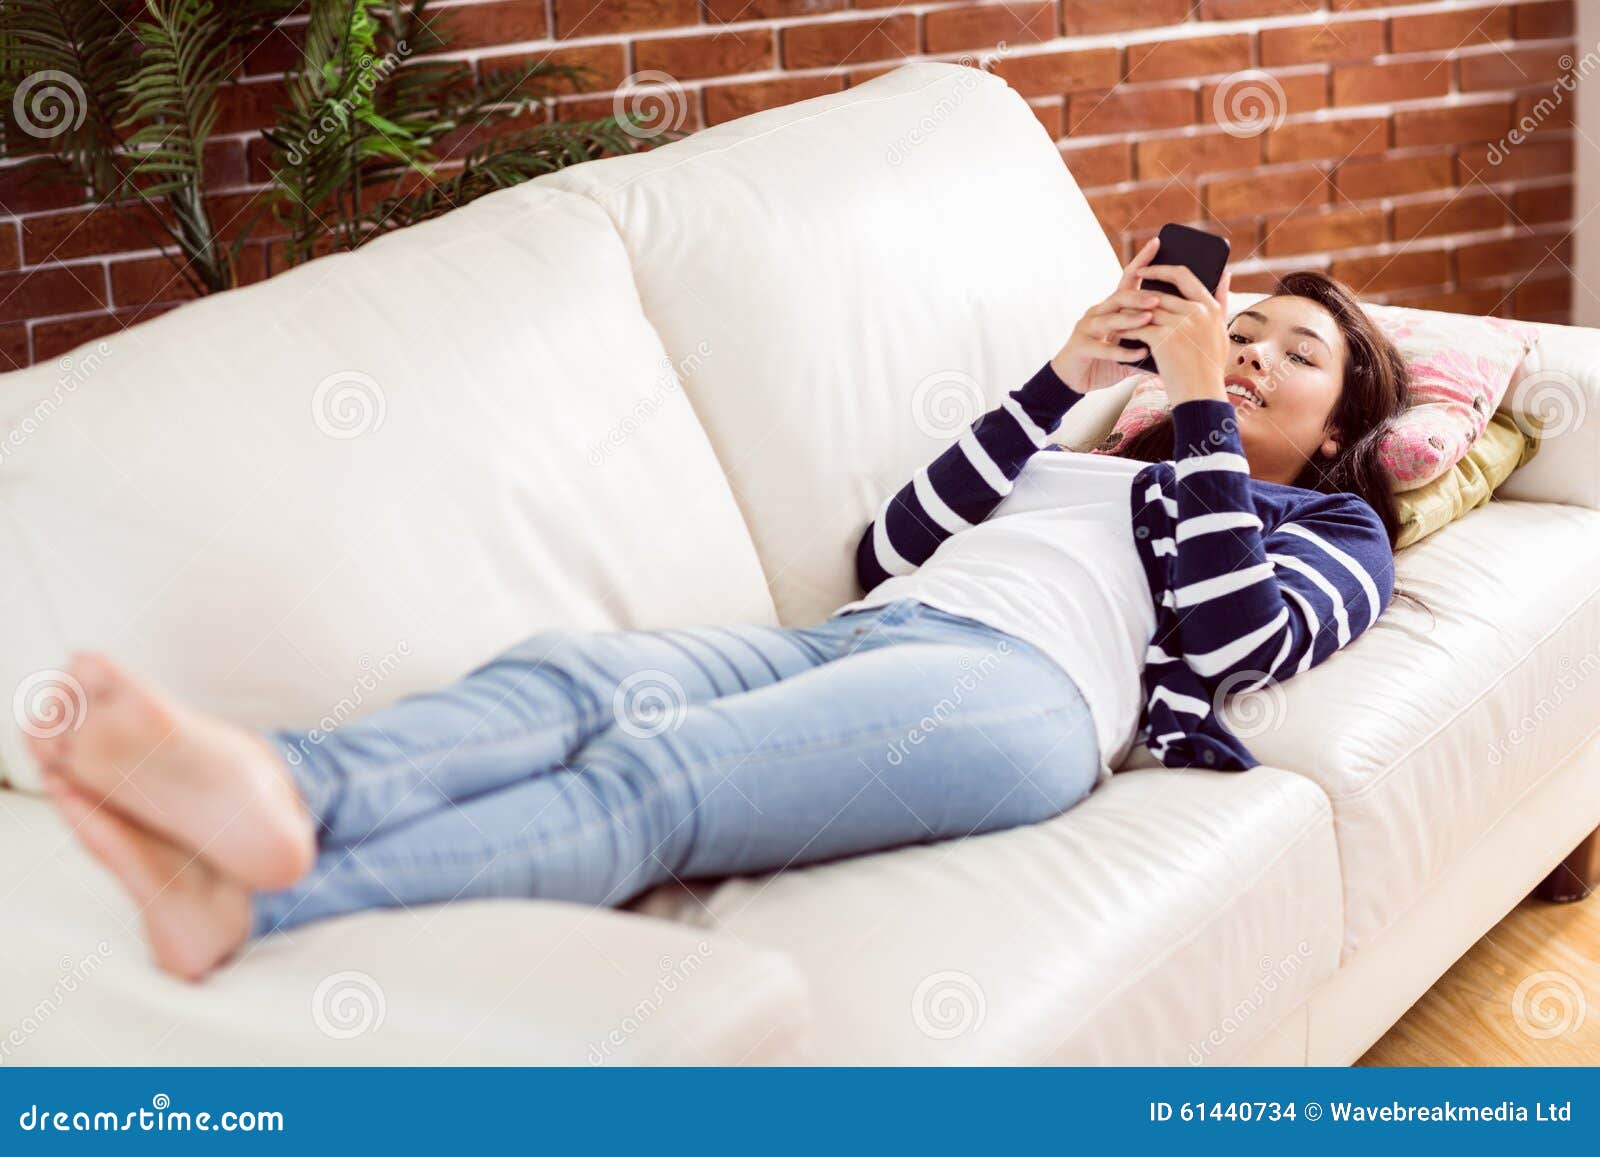 Лежал или лижал. Телефон лежит на диване. Девушка лежит на диване. Женская фотосессия на диване с телефоном. Человек лежит на диване.